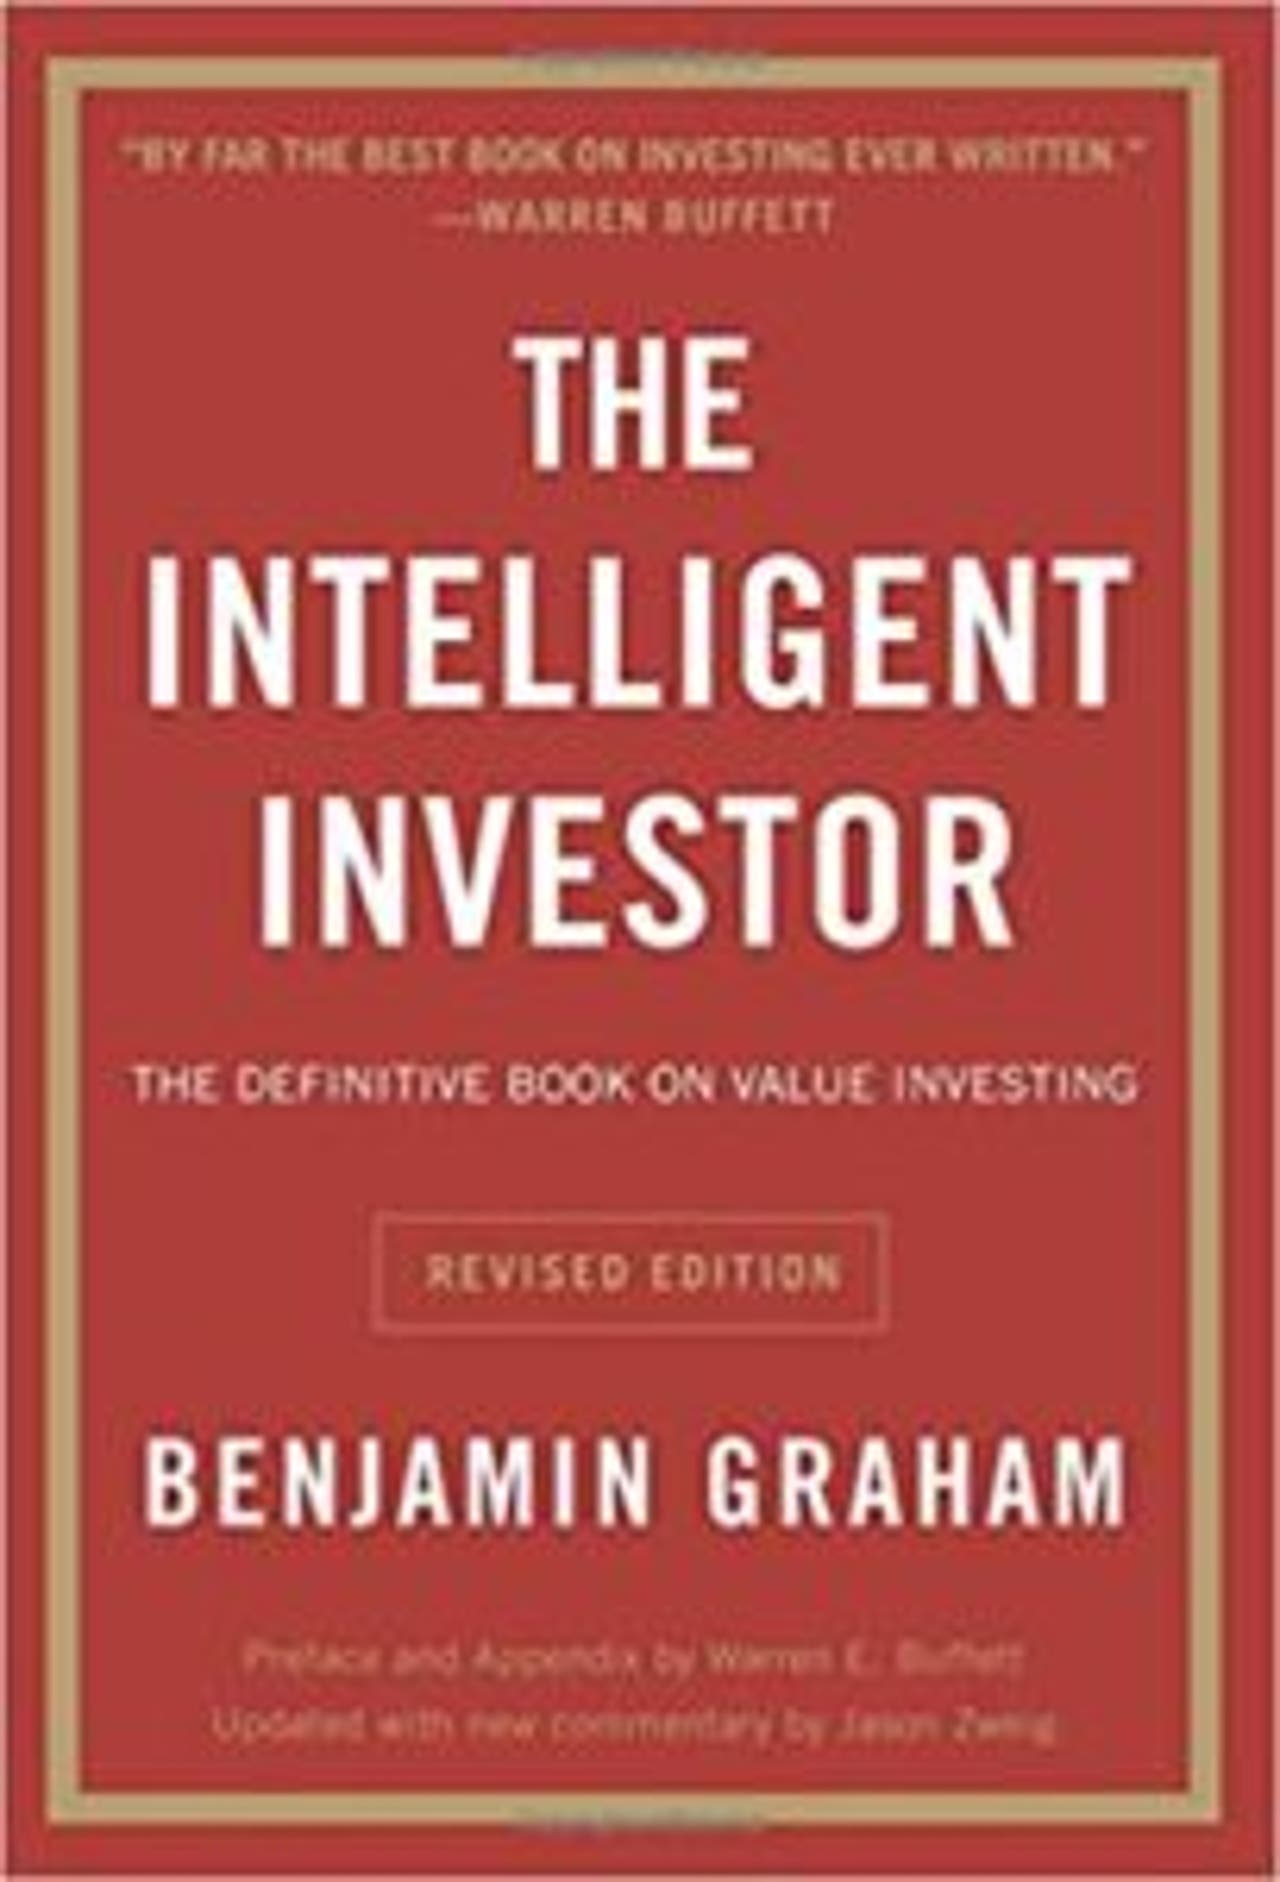 intelligent investor